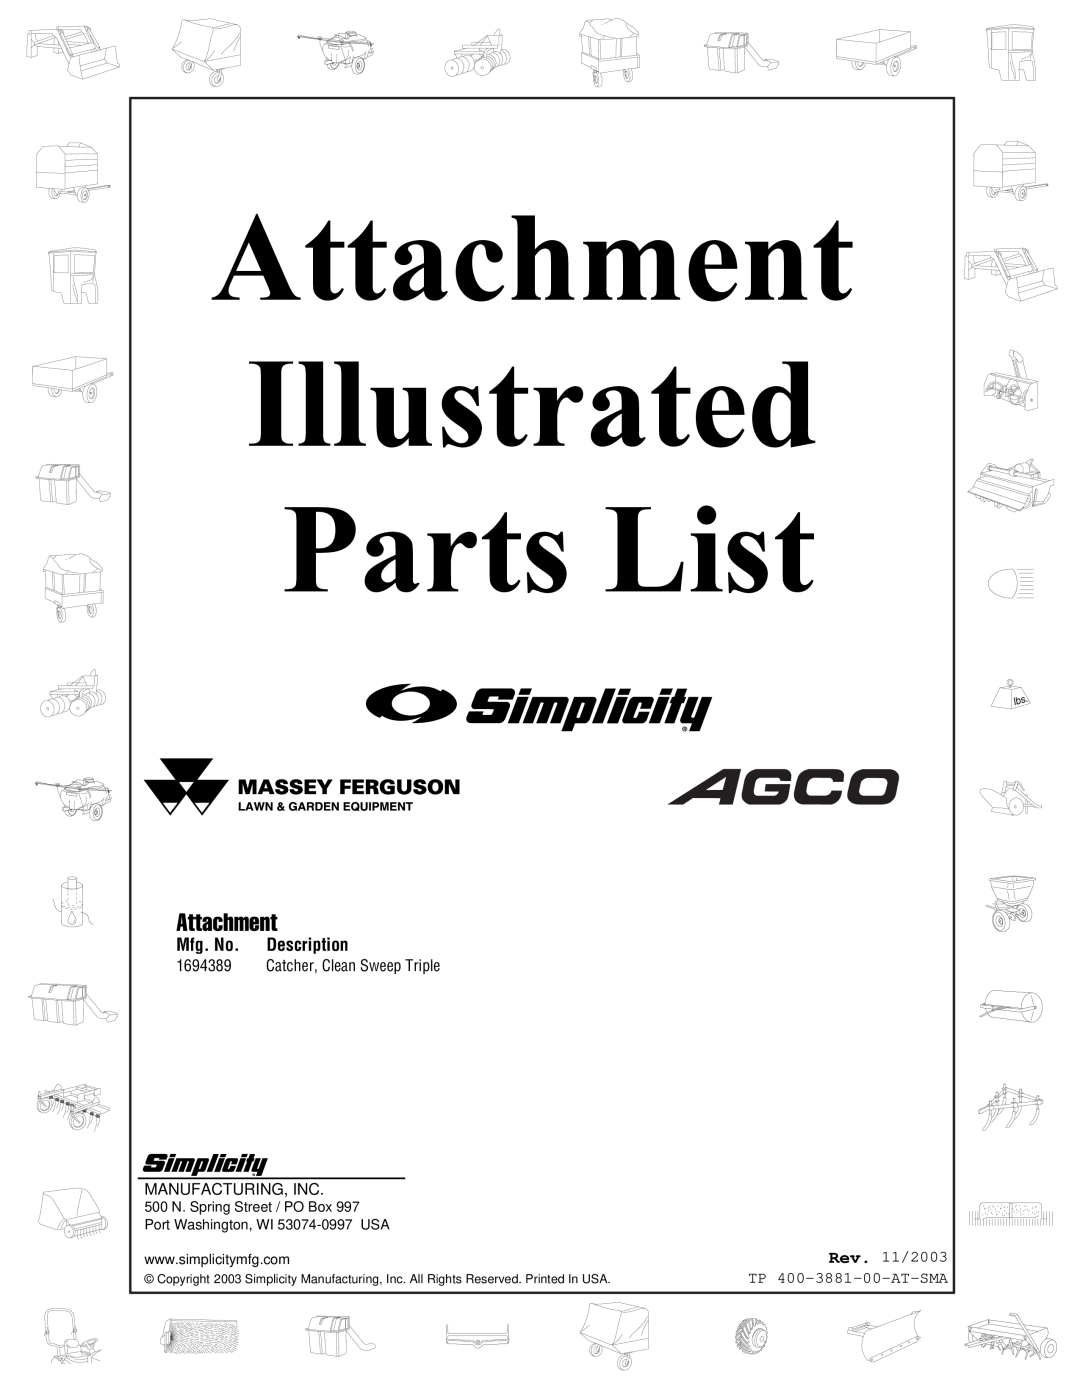 Snapper manual Mfg. No. Description, Rev. 11/2003, TP 400-3881-00-AT-SMA, Attachment Illustrated Parts List 